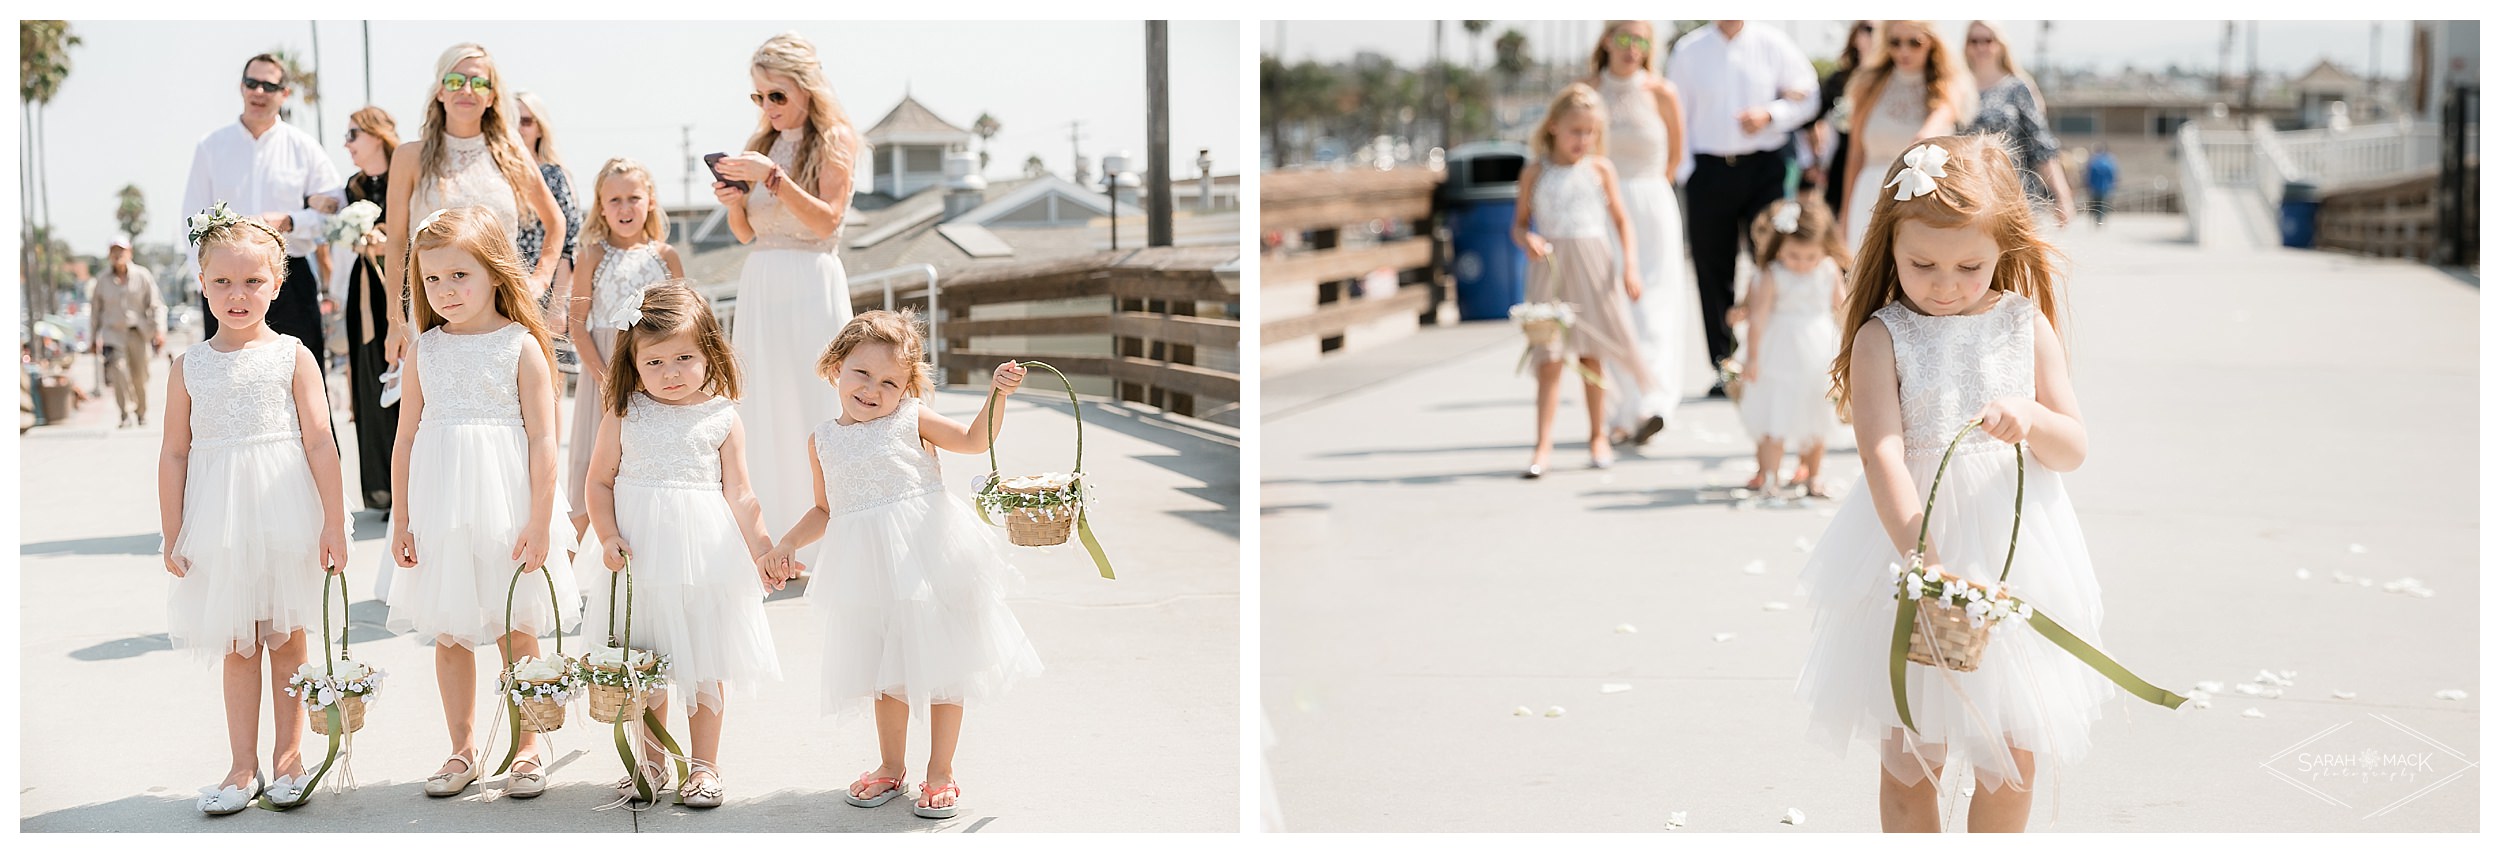 LM-Newport-Beach-Pier-Intimate-Wedding-Photography 52.jpg